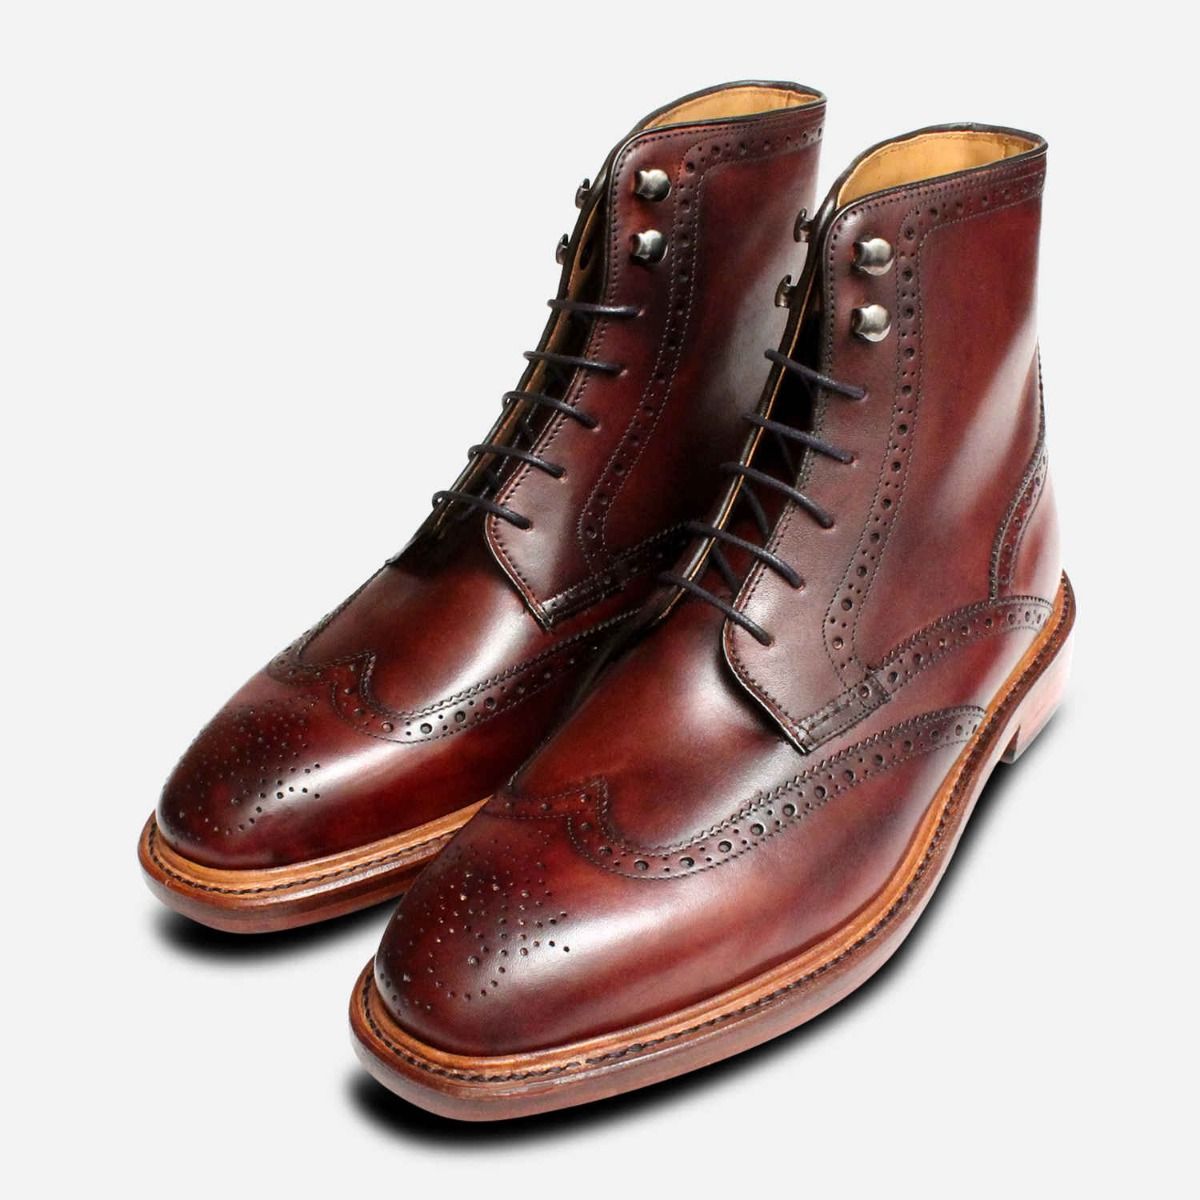 oliver sweeney boots sale online -